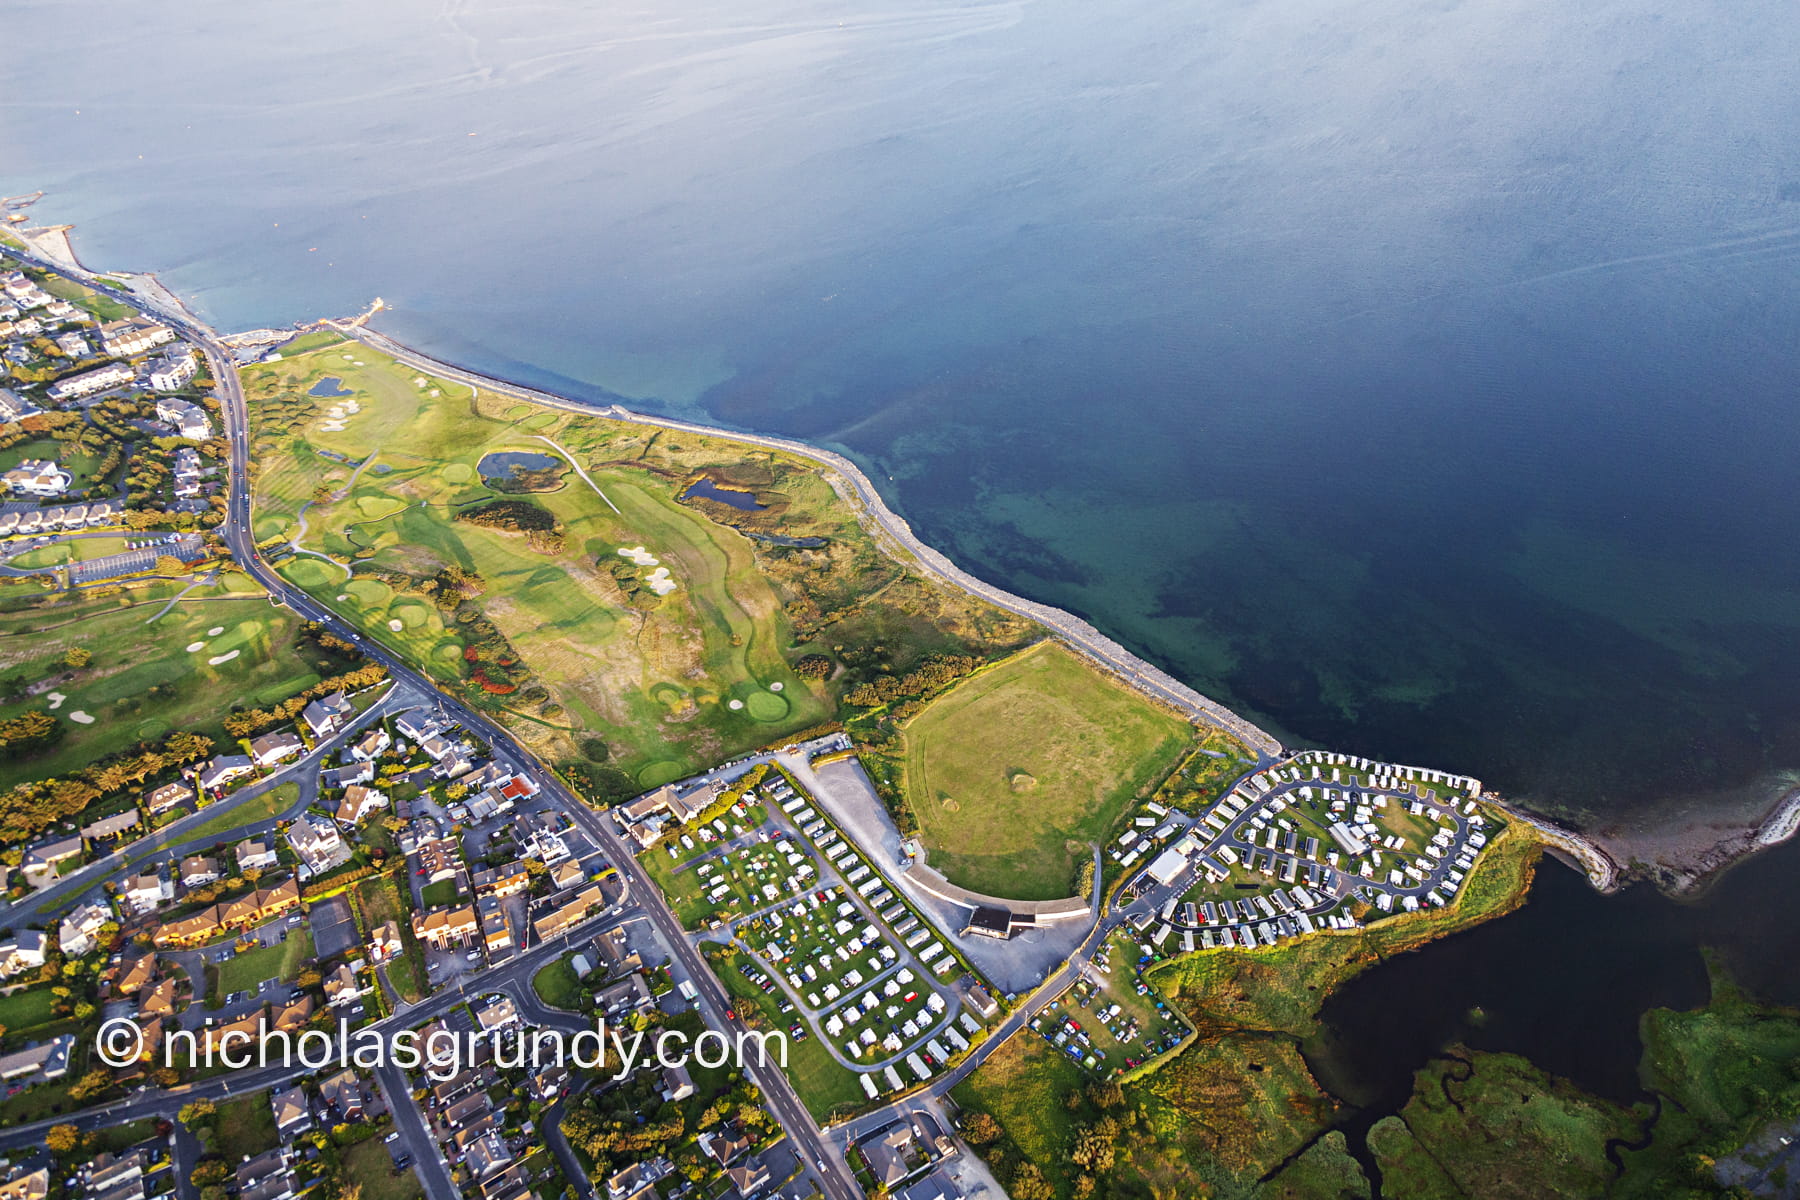 Galway Flying Club Aerial Photo Galway